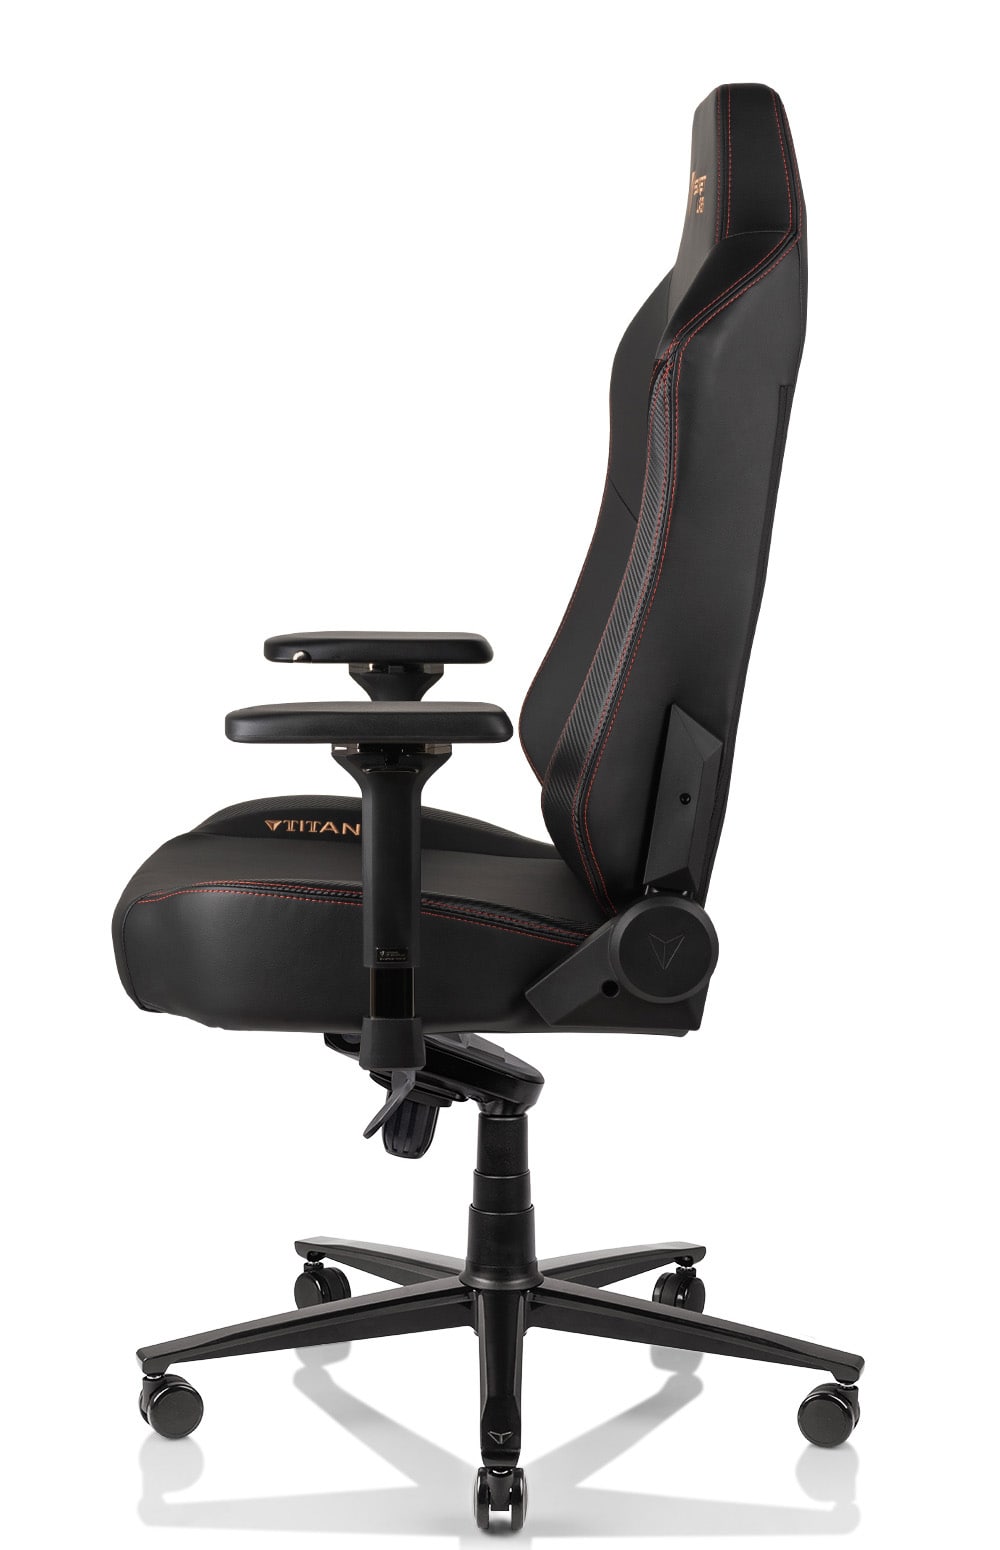 Secretlab Titan XL 2020 Gaming Chair Review - IGN